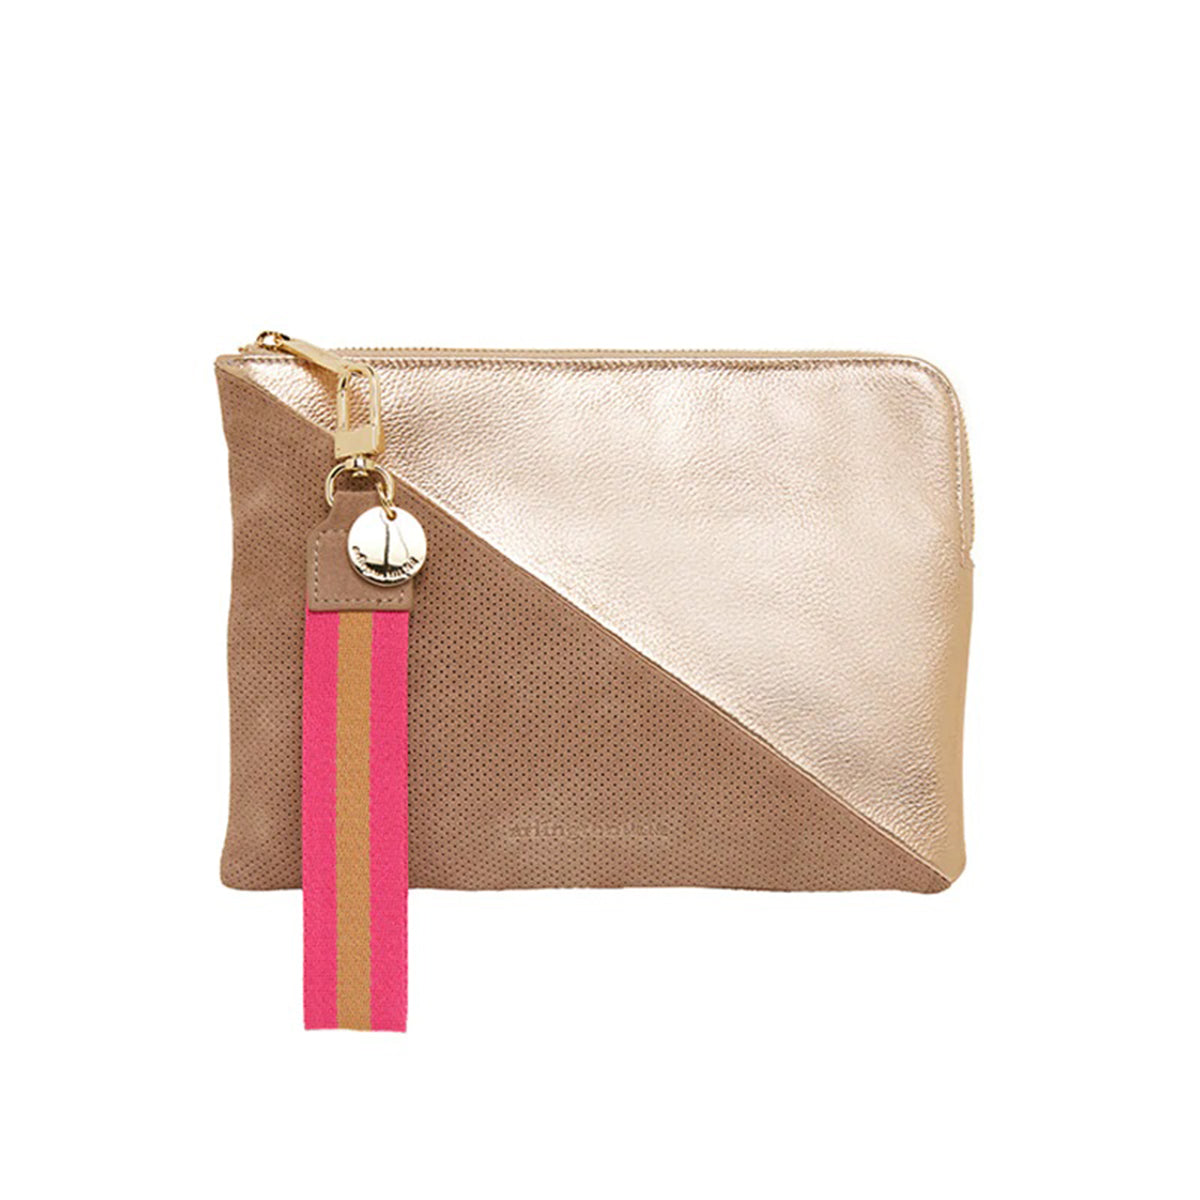 Animal Hair Leather Envelope Clutch Bag New Australia R Ho Bag Handbag |  eBay